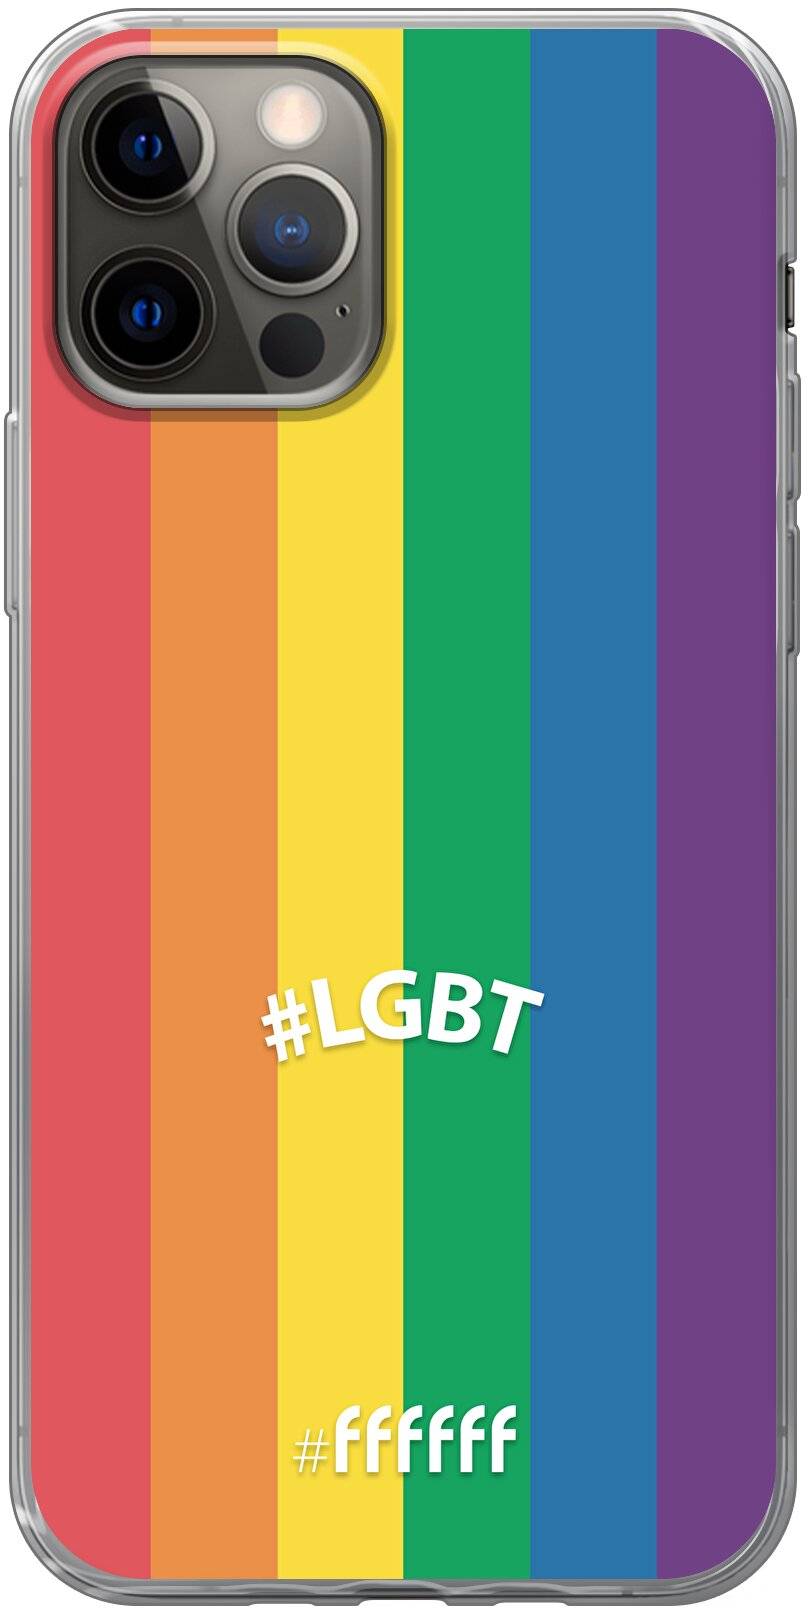 #LGBT - #LGBT iPhone 12 Pro